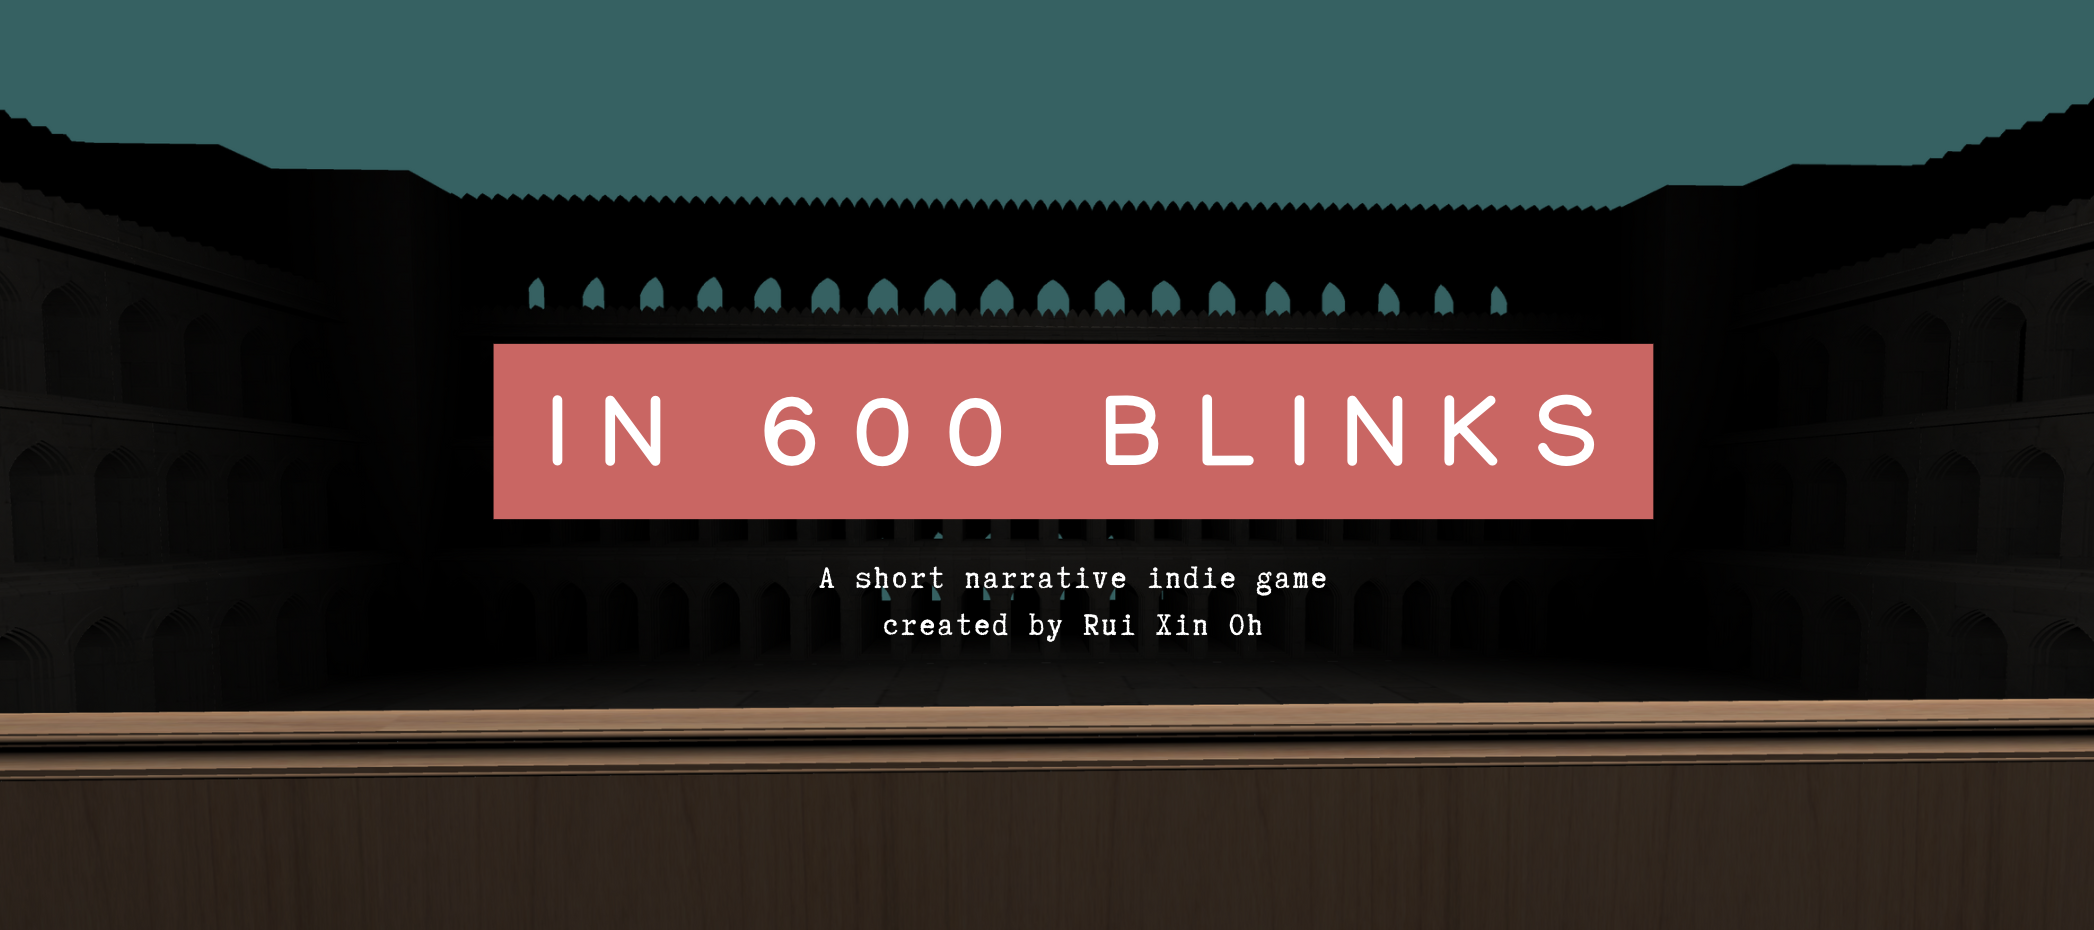 In 600 Blinks